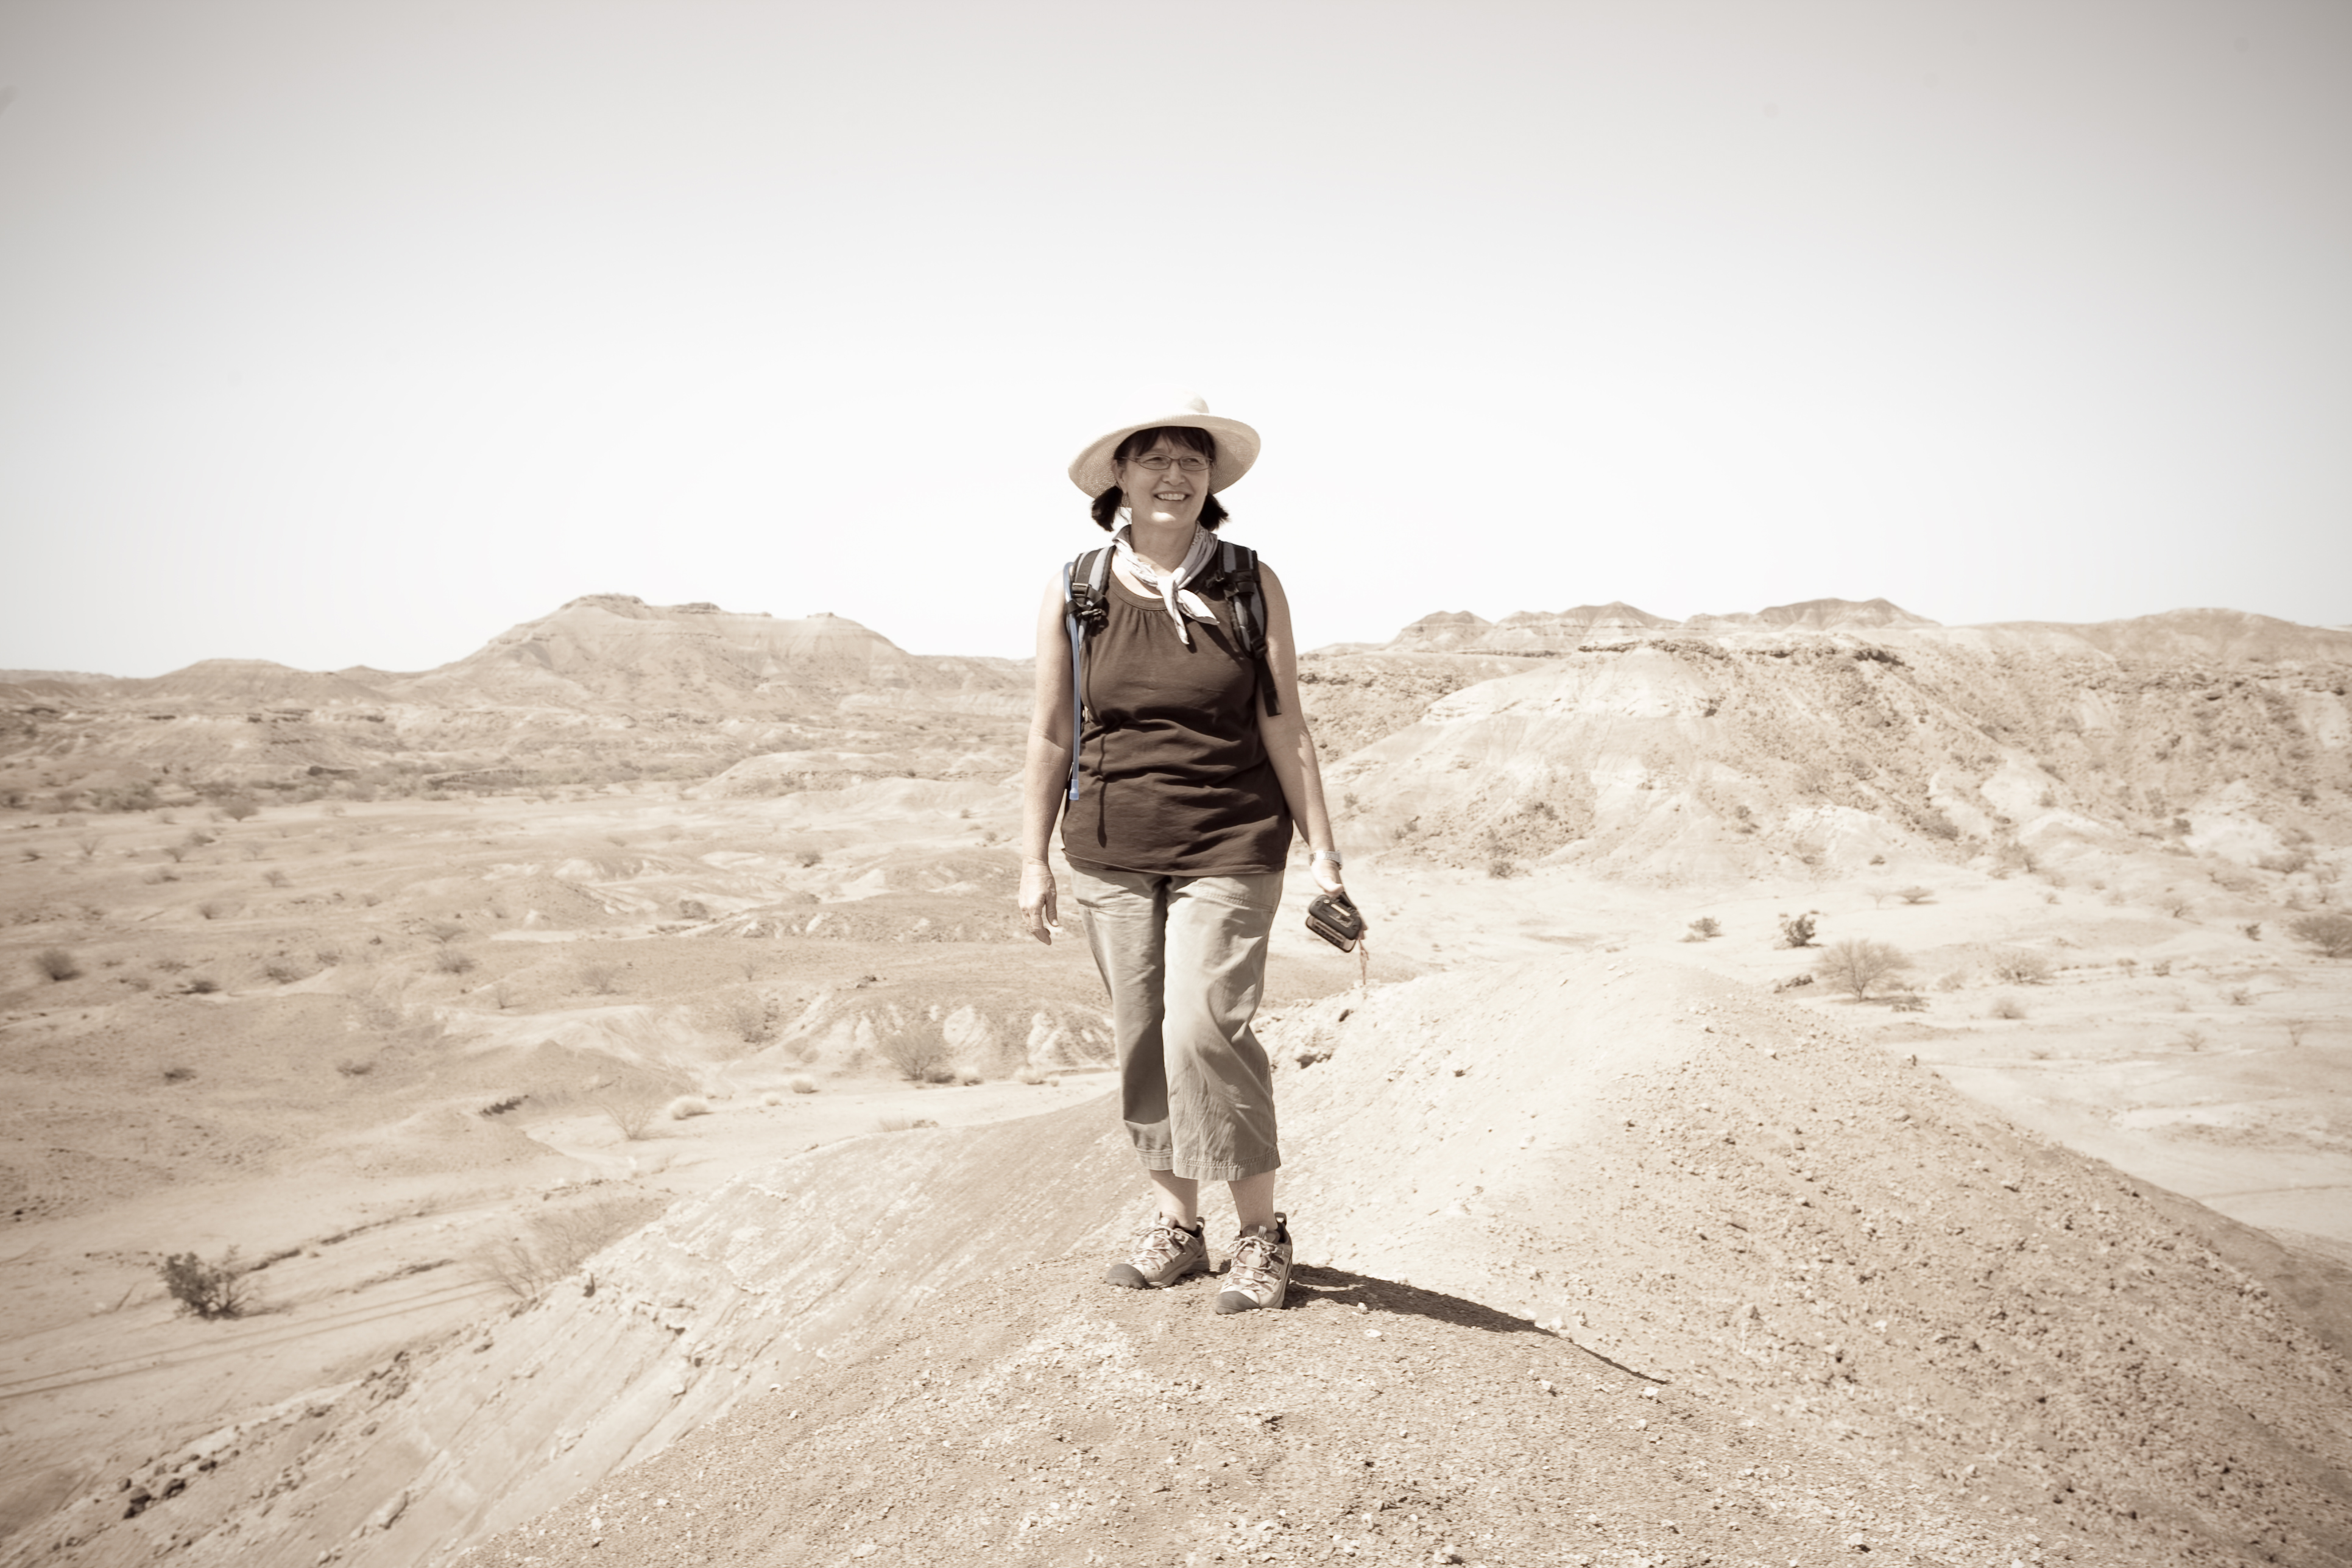 Portrait of a woman standing in a desert in hiking gear